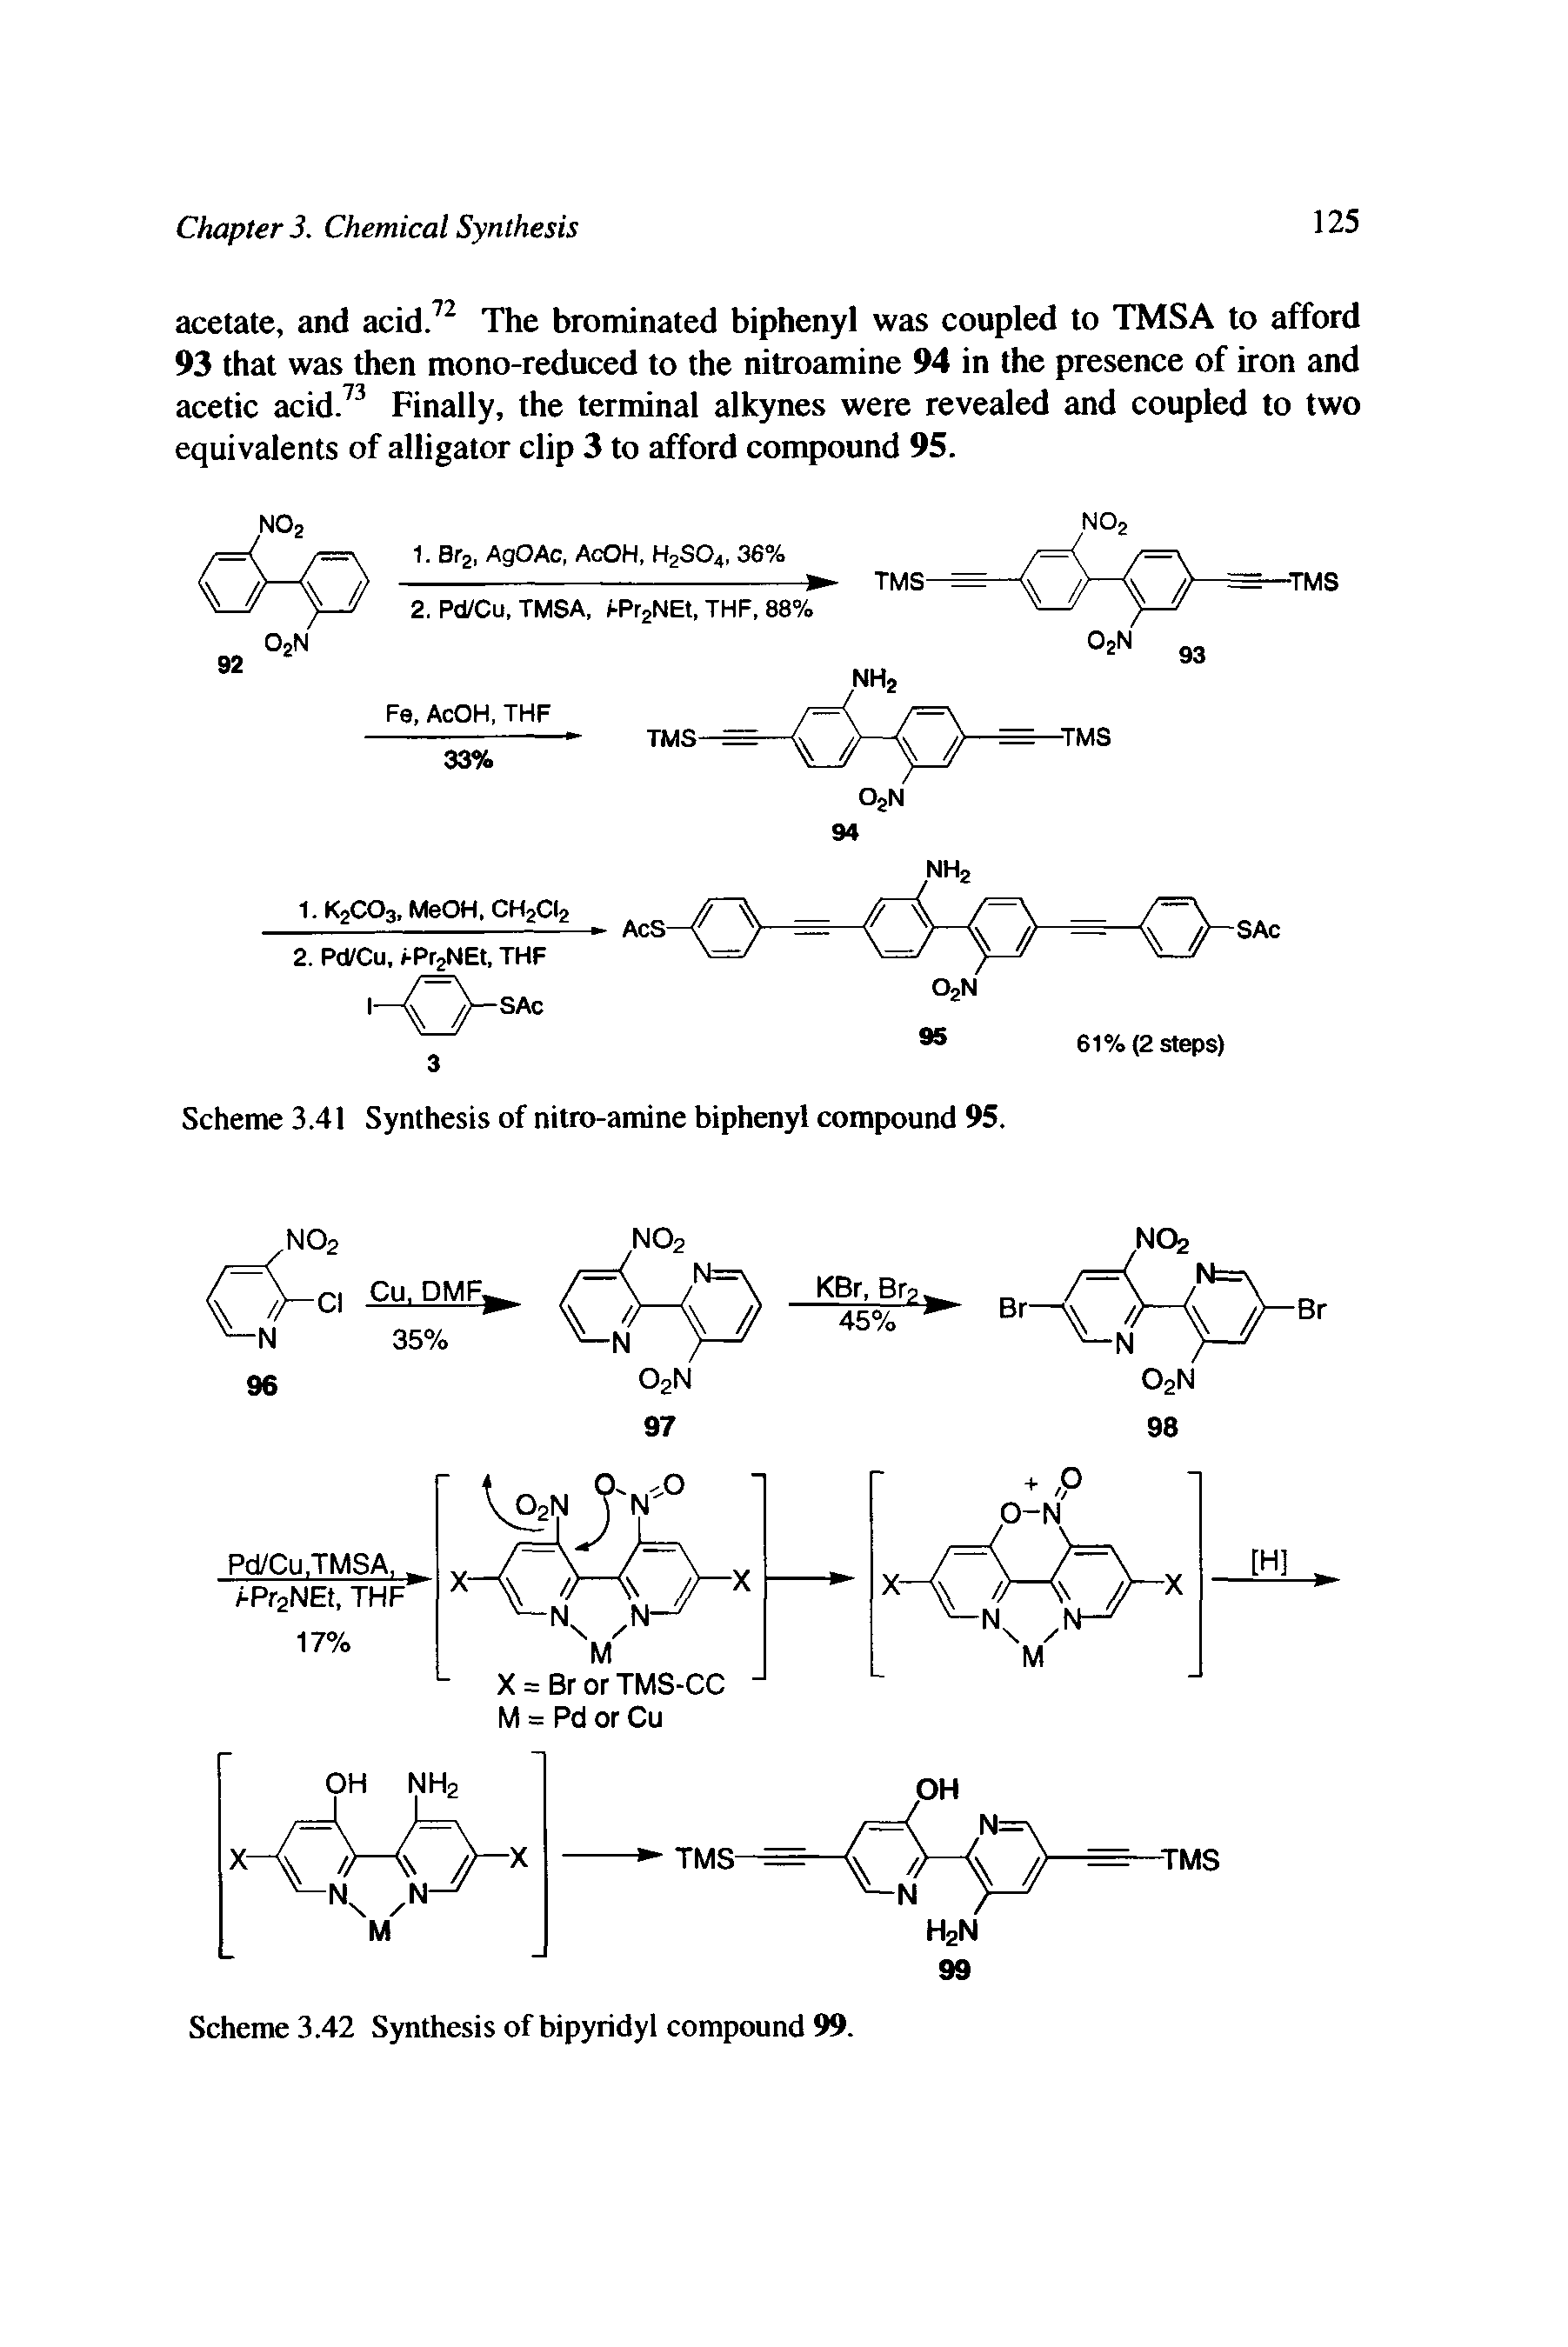 Scheme 3.41 Synthesis of nitro-amine biphenyl compound 95.